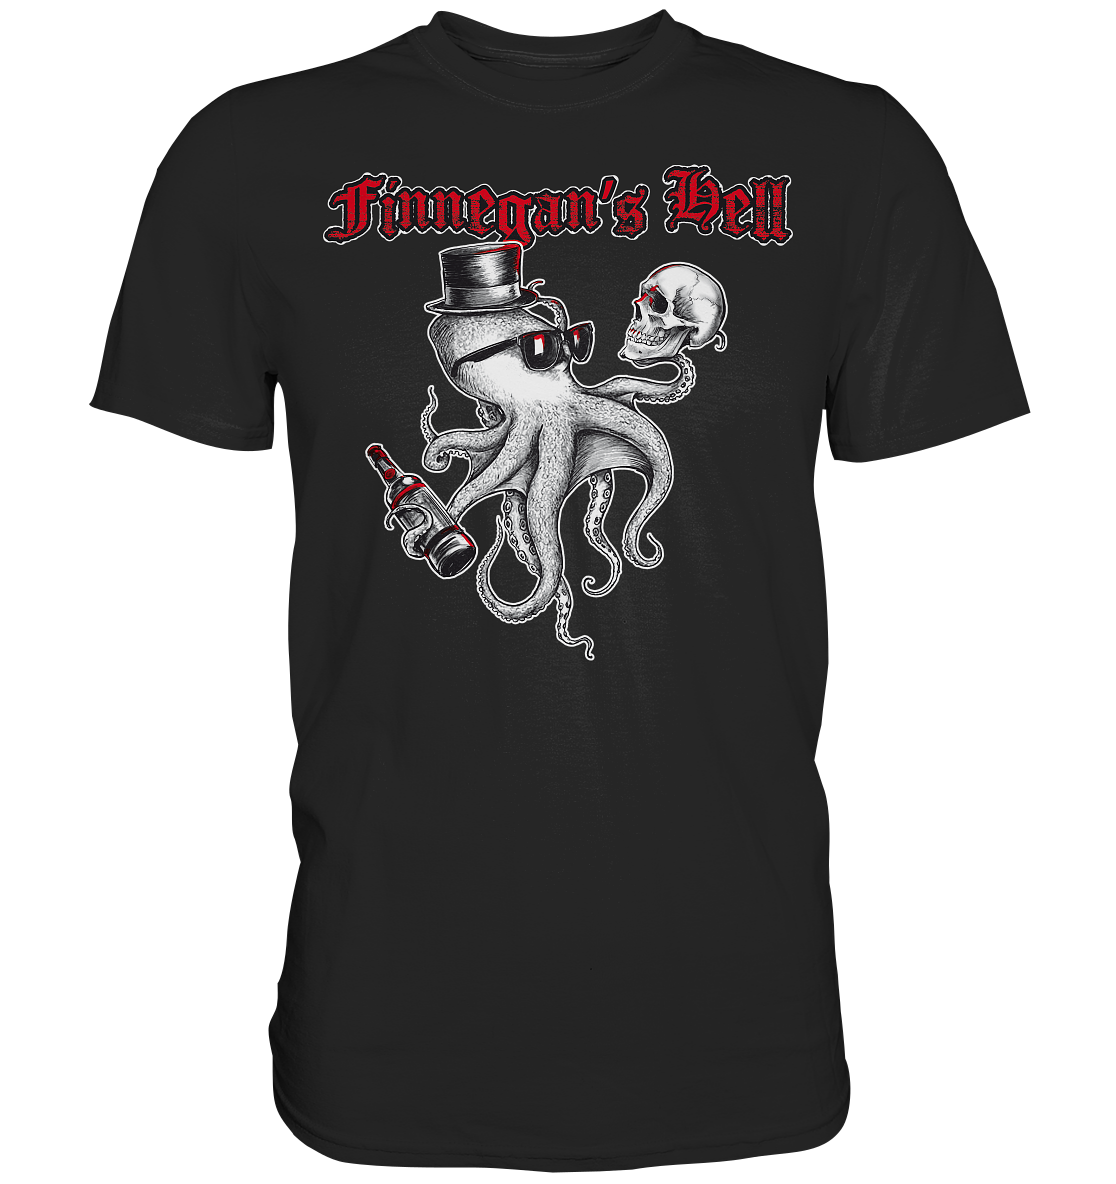 Finnegan's Hell "Octopus" - Premium Shirt